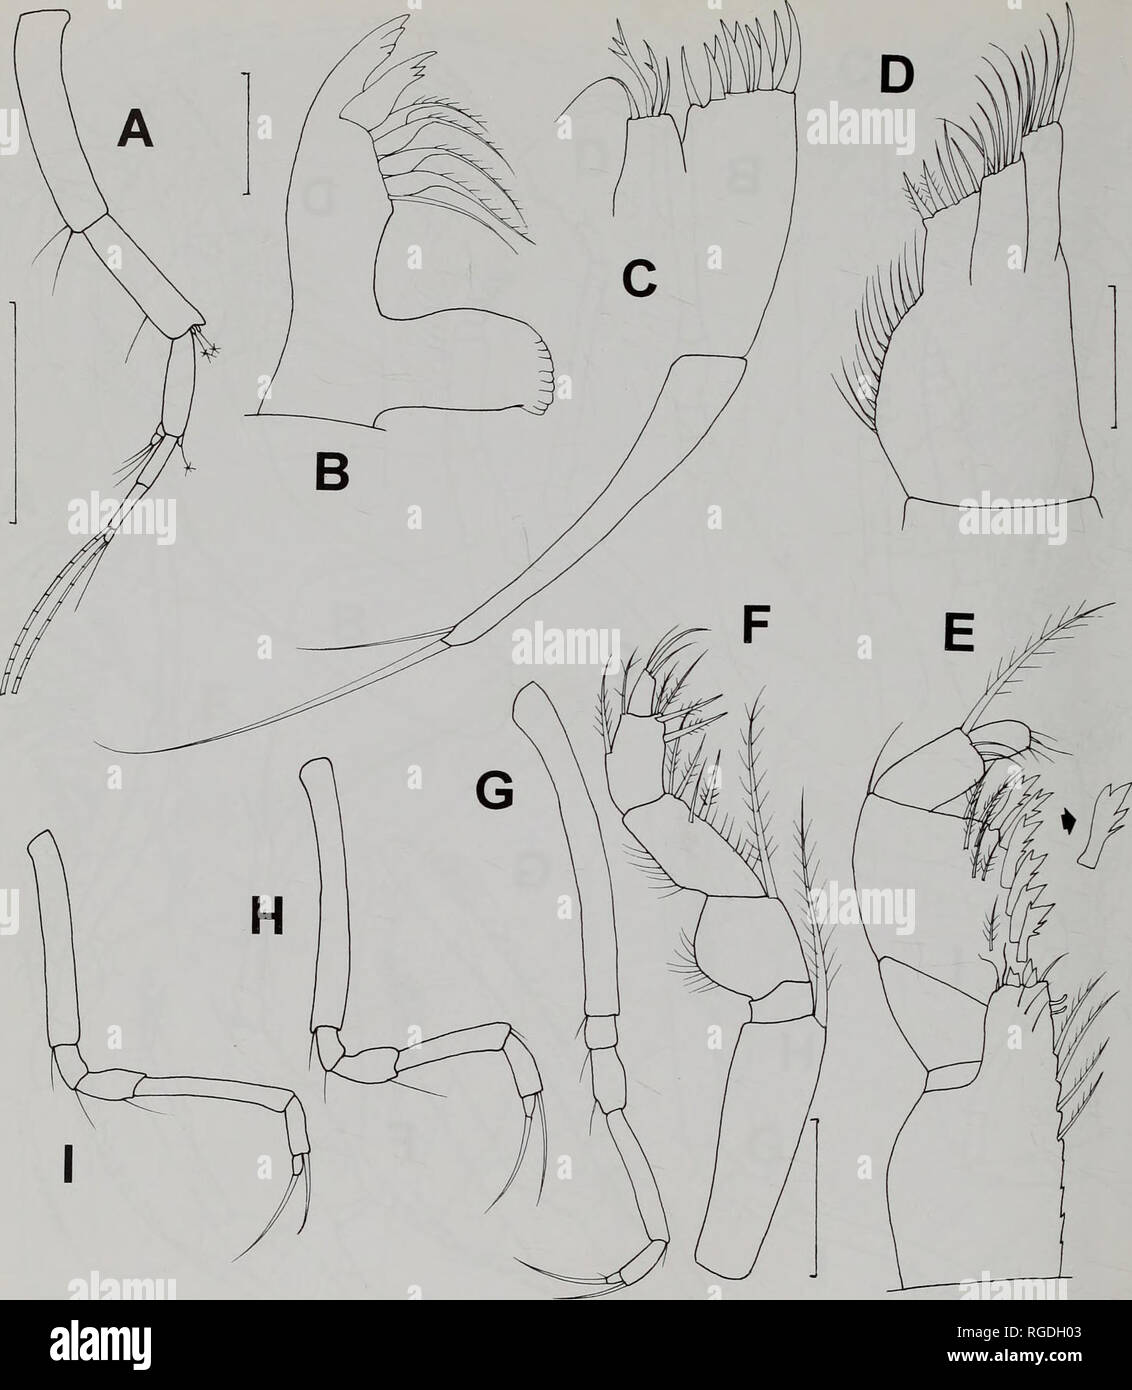 . Bulletin of the Natural History Museum Zoology. 160 I. PETRESCU. Fig. 10 Styloptocuma dayae (Jones, 1984) female A. antenna 1; B. mandible; C. maxilla 1; D. maxilla 2; E. maxilliped 1; E maxilliped 2; G. pereopod 3; H. pereopod 4: I. pereopod 5. Scale bars (in mm): A 0.2; B, E 0.05; C, D 0.05; F 0.1. teeth on both margins, very long and slender carpus and propodus, carpus a little longer than propodus. Pereopod 2 (Fig. 14 A), carpus with teeth on inner margin and with 2 stiff acuminate setae on outer distal corner, dactylus 3 times longer than propodus, with simple setae. Pereopod 3 (Fig. 14 Stock Photo